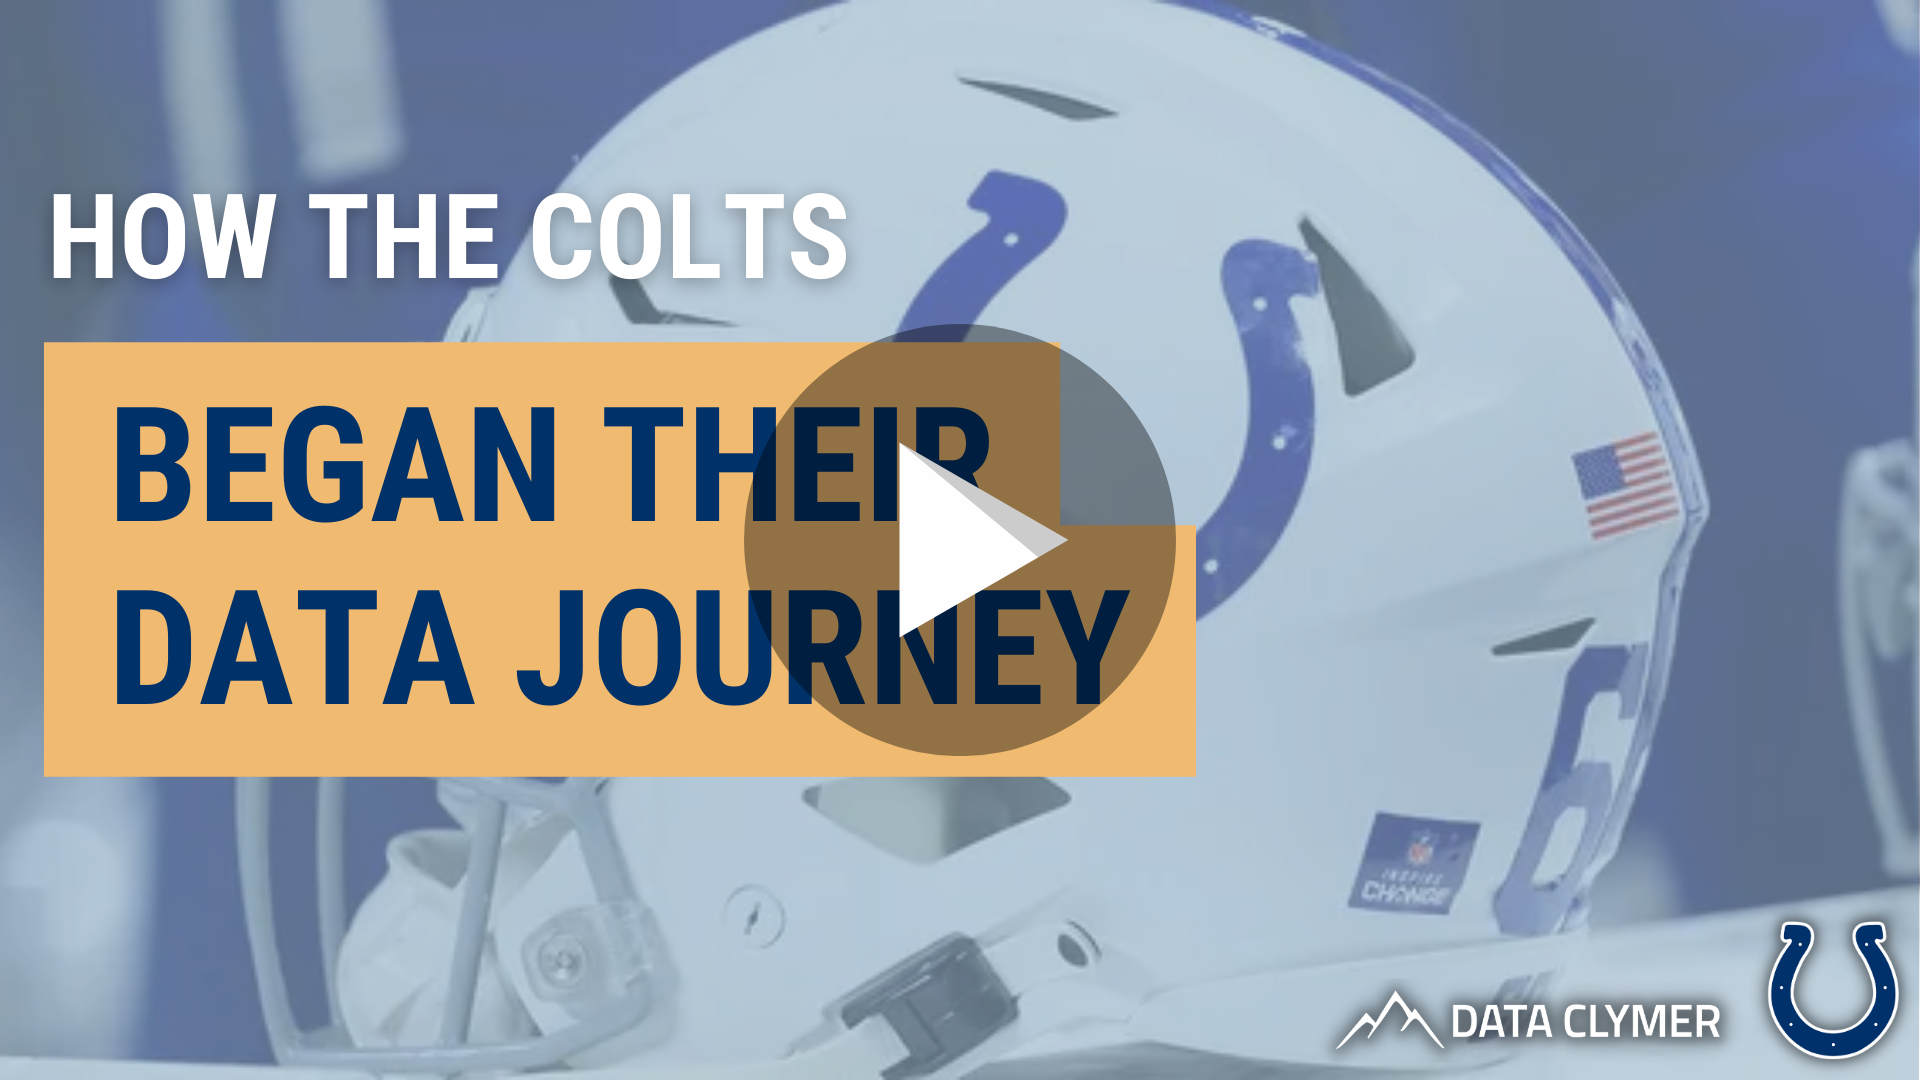 Data analytics in sports: Colts data journey